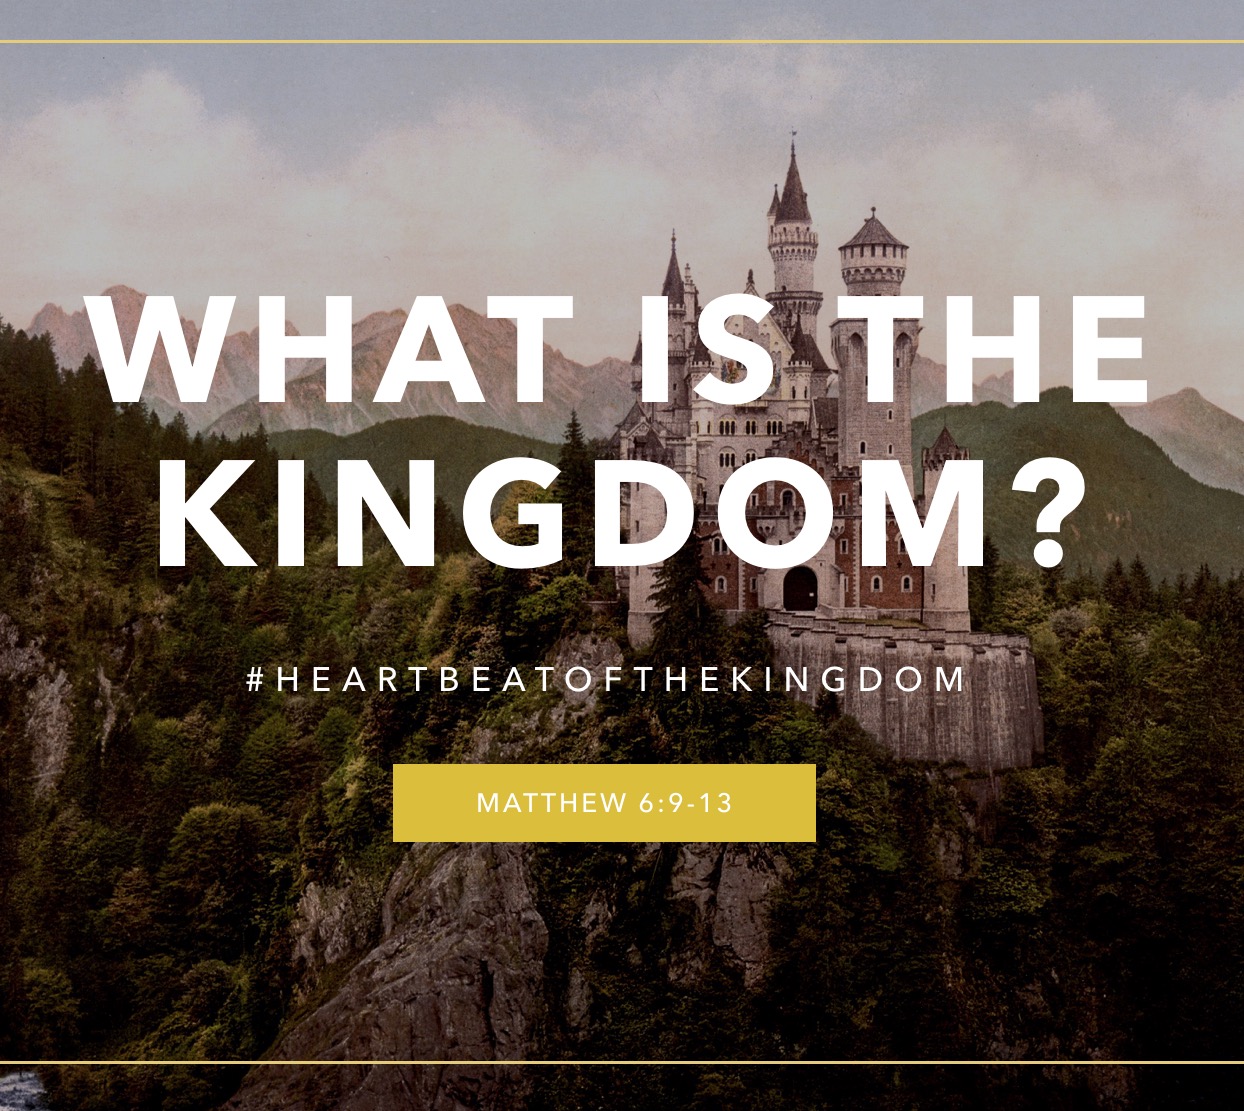 Heartbeat of the Kingdom - Kingdom Questions